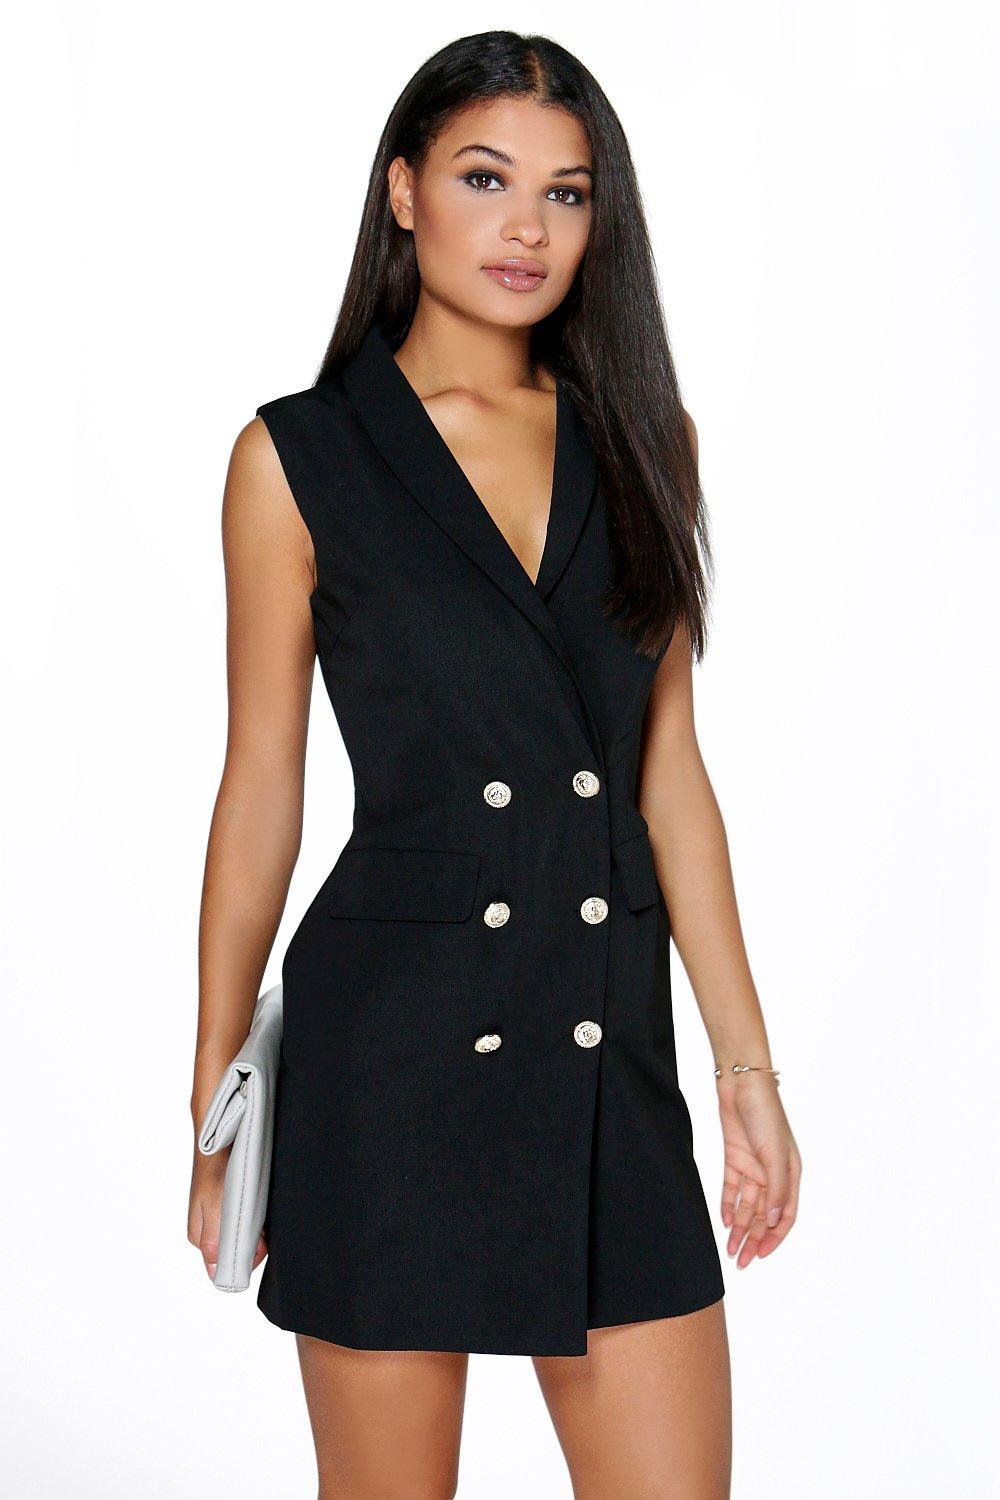 Boohoo Womens Boutique Aria Button Detail Sleeveless Blazer Dress | eBay